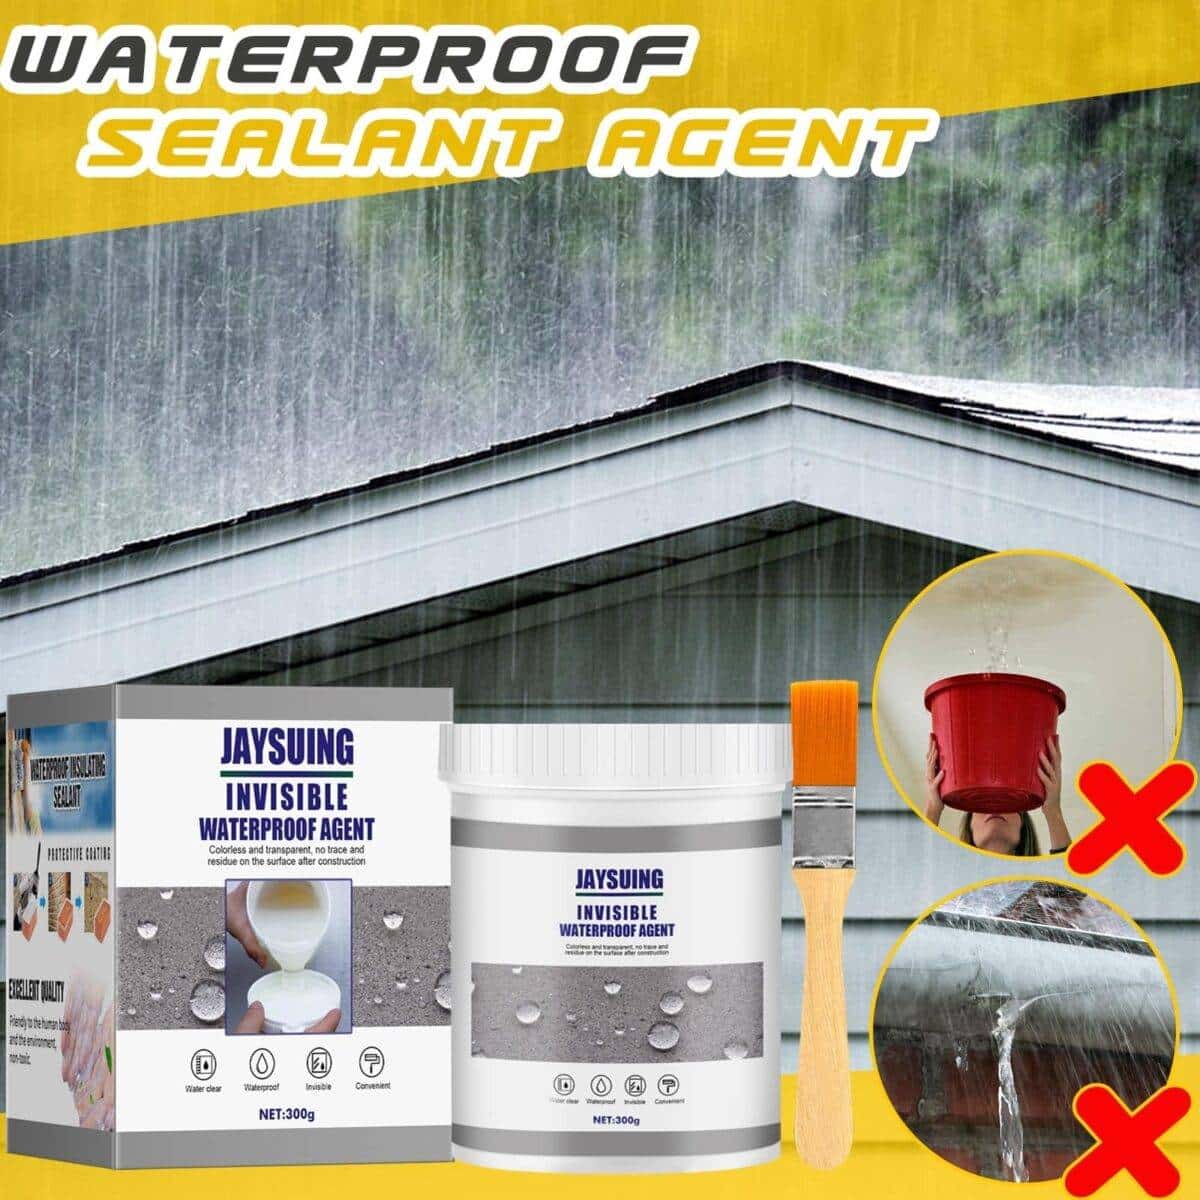 https://ineedaclean.com New 30/100/300g Waterproof Agent Toilet Anti-Leak Glue Strong Bonding Adhesive Sealant Invisible Glue Repair Tools New Arrivals cb5feb1b7314637725a2e7: 100g|300g|30g  I Need A Clean https://ineedaclean.com/the-clean-store/new-30-100-300g-waterproof-agent-toilet-anti-leak-glue-strong-bonding-adhesive-sealant-invisible-glue-repair-tools/